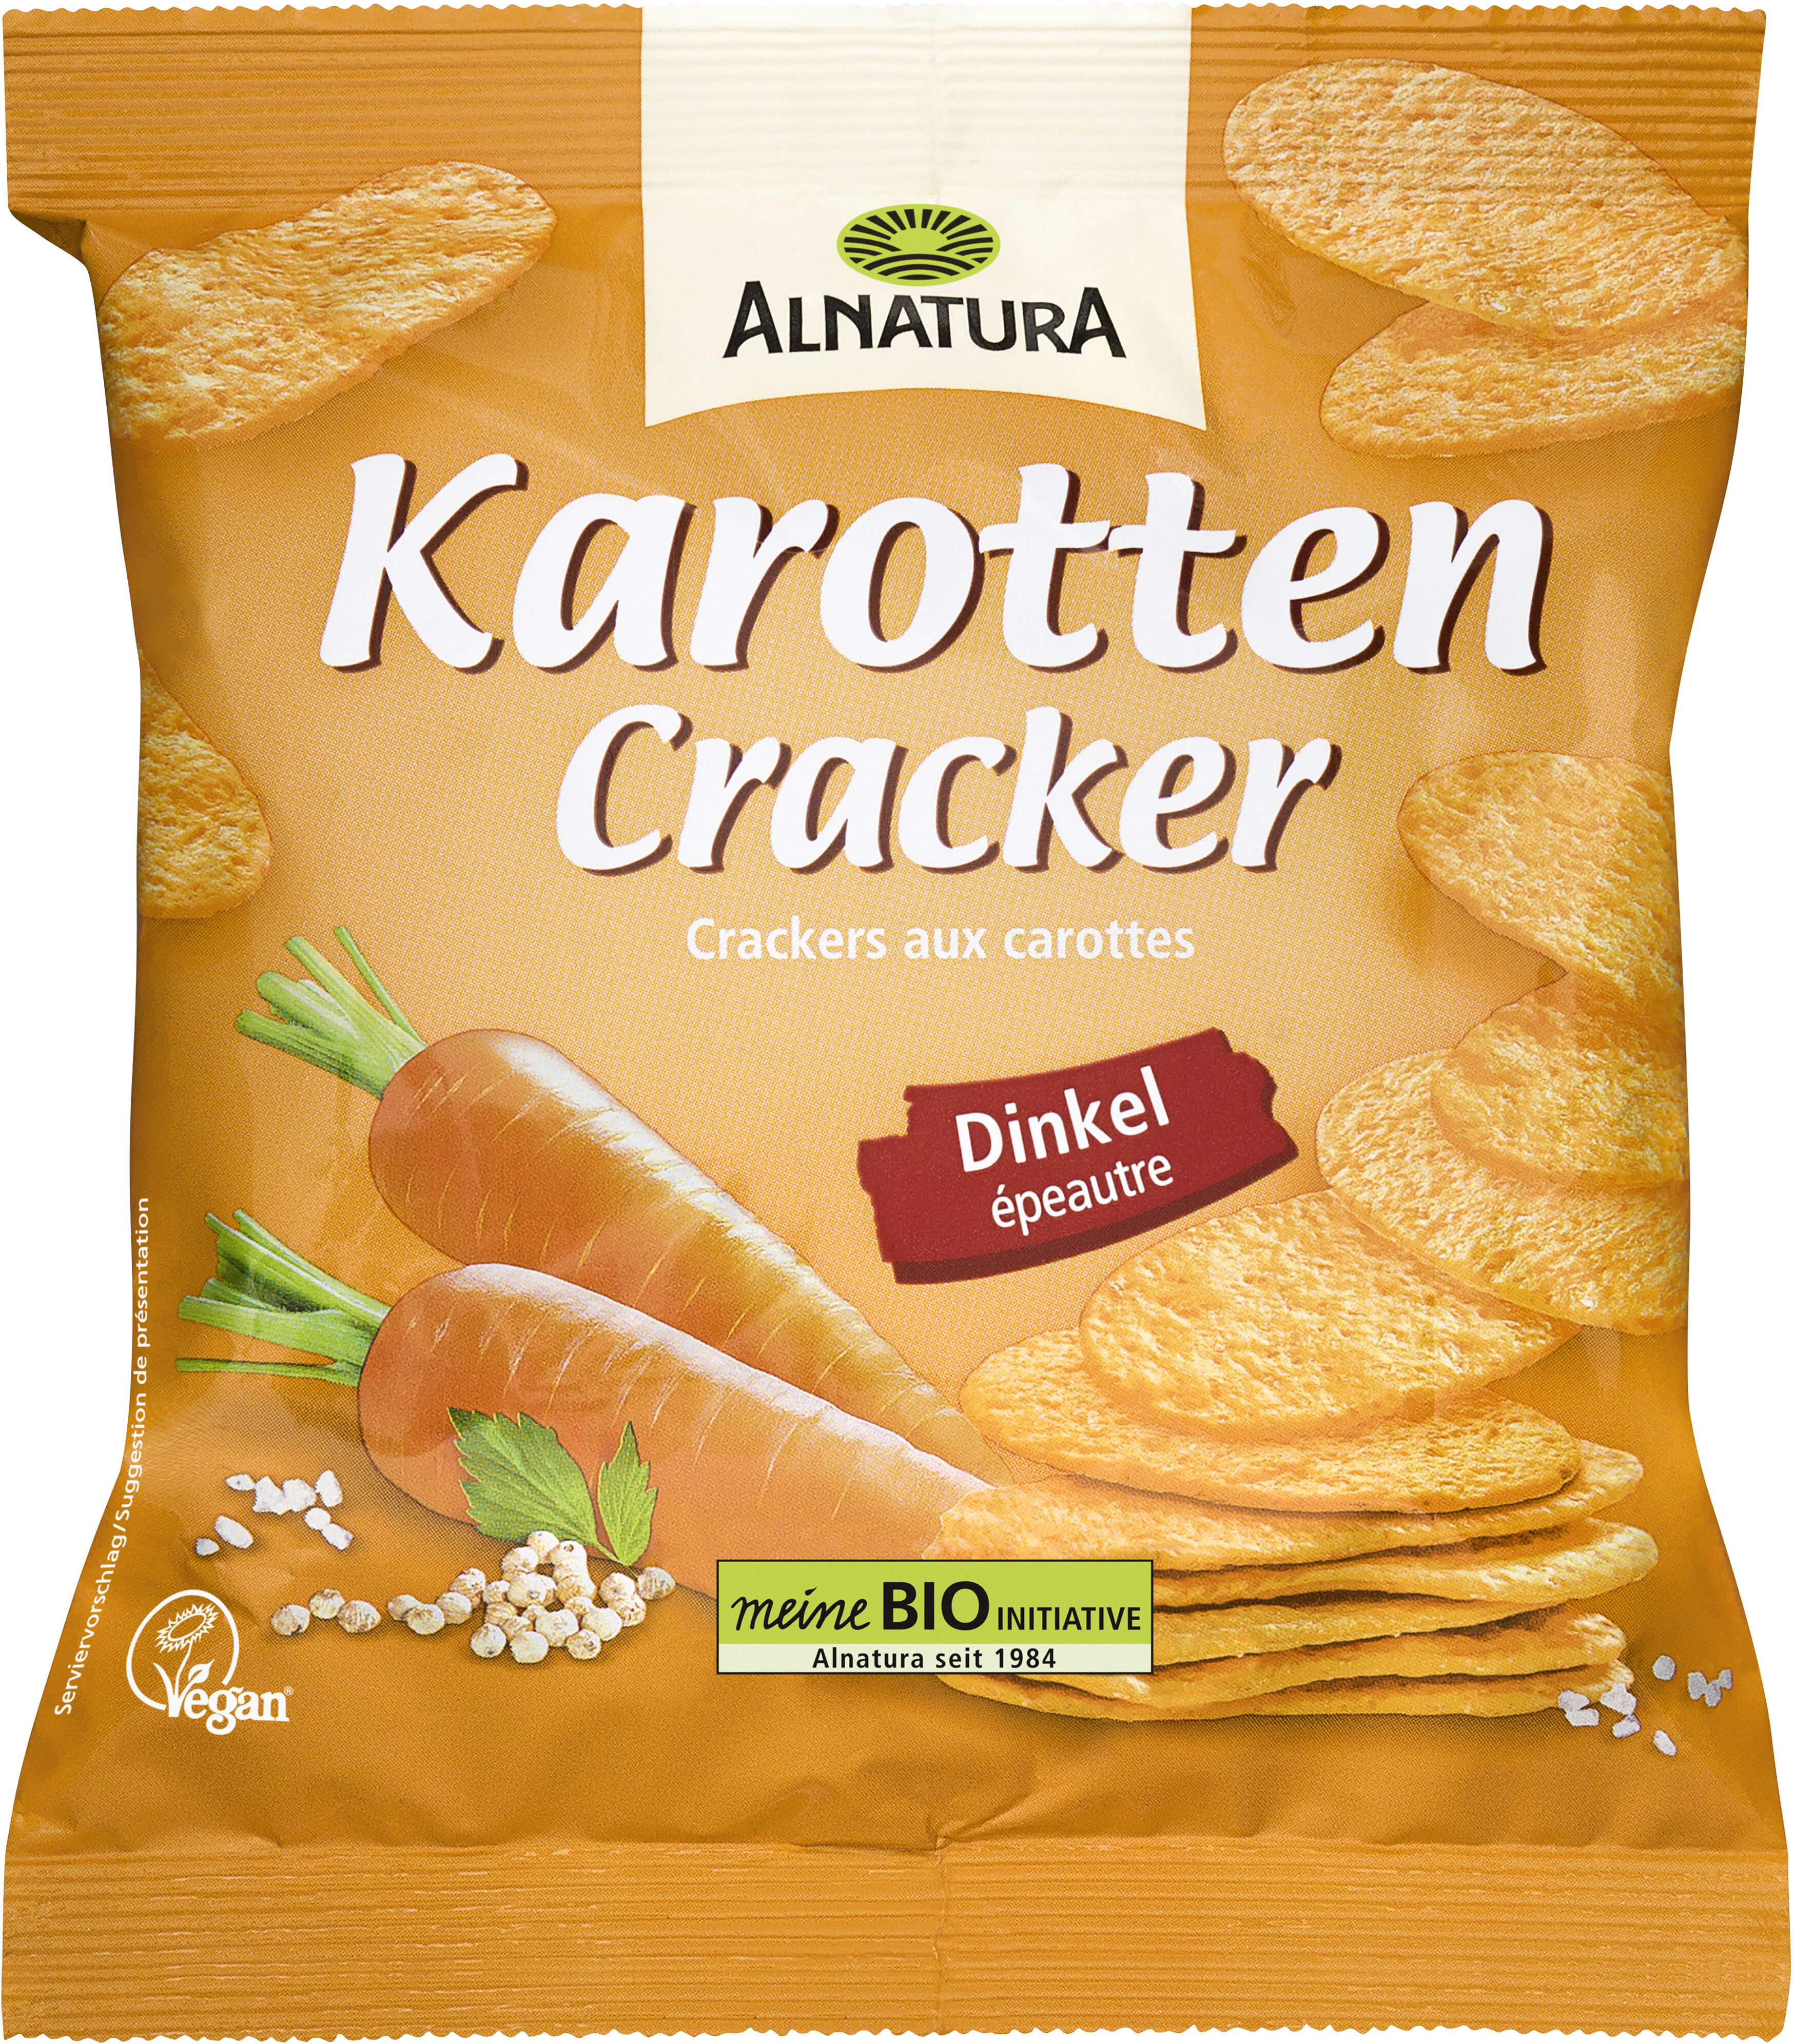 Karotten Cracker - Product